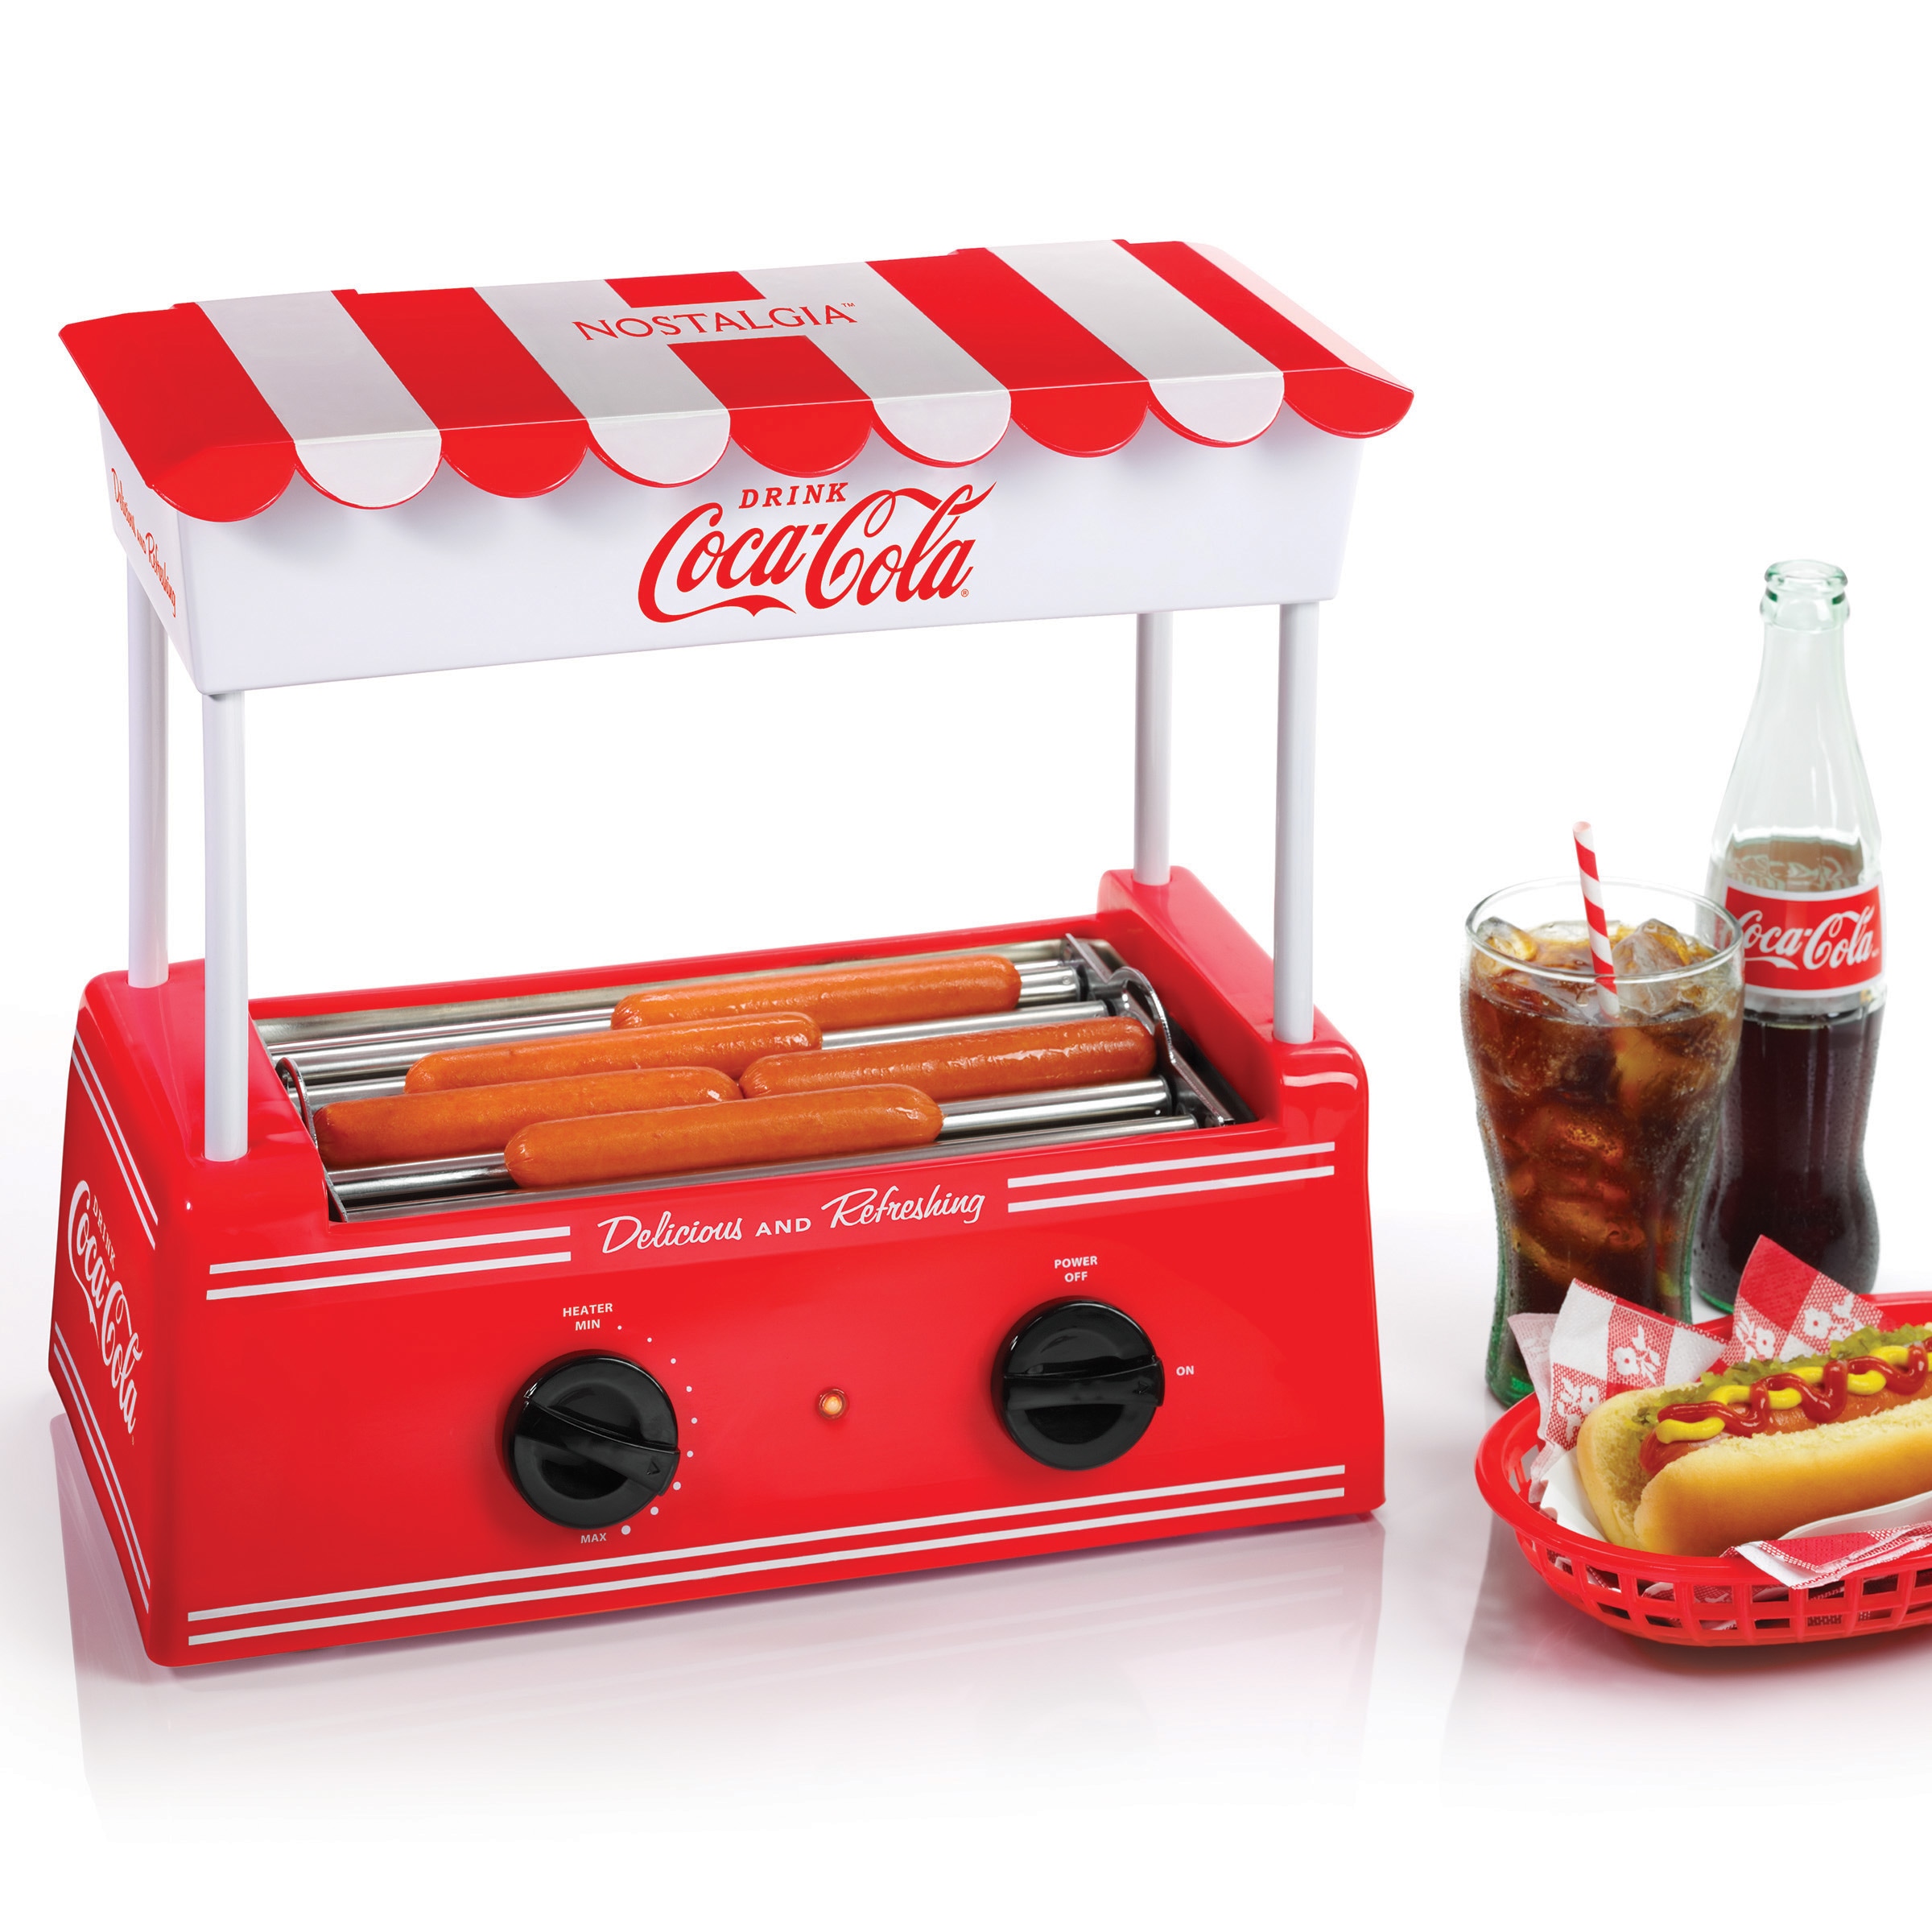 Nostalgia Retro Series 4-Slice Red Hot Dog and Bun Toaster with